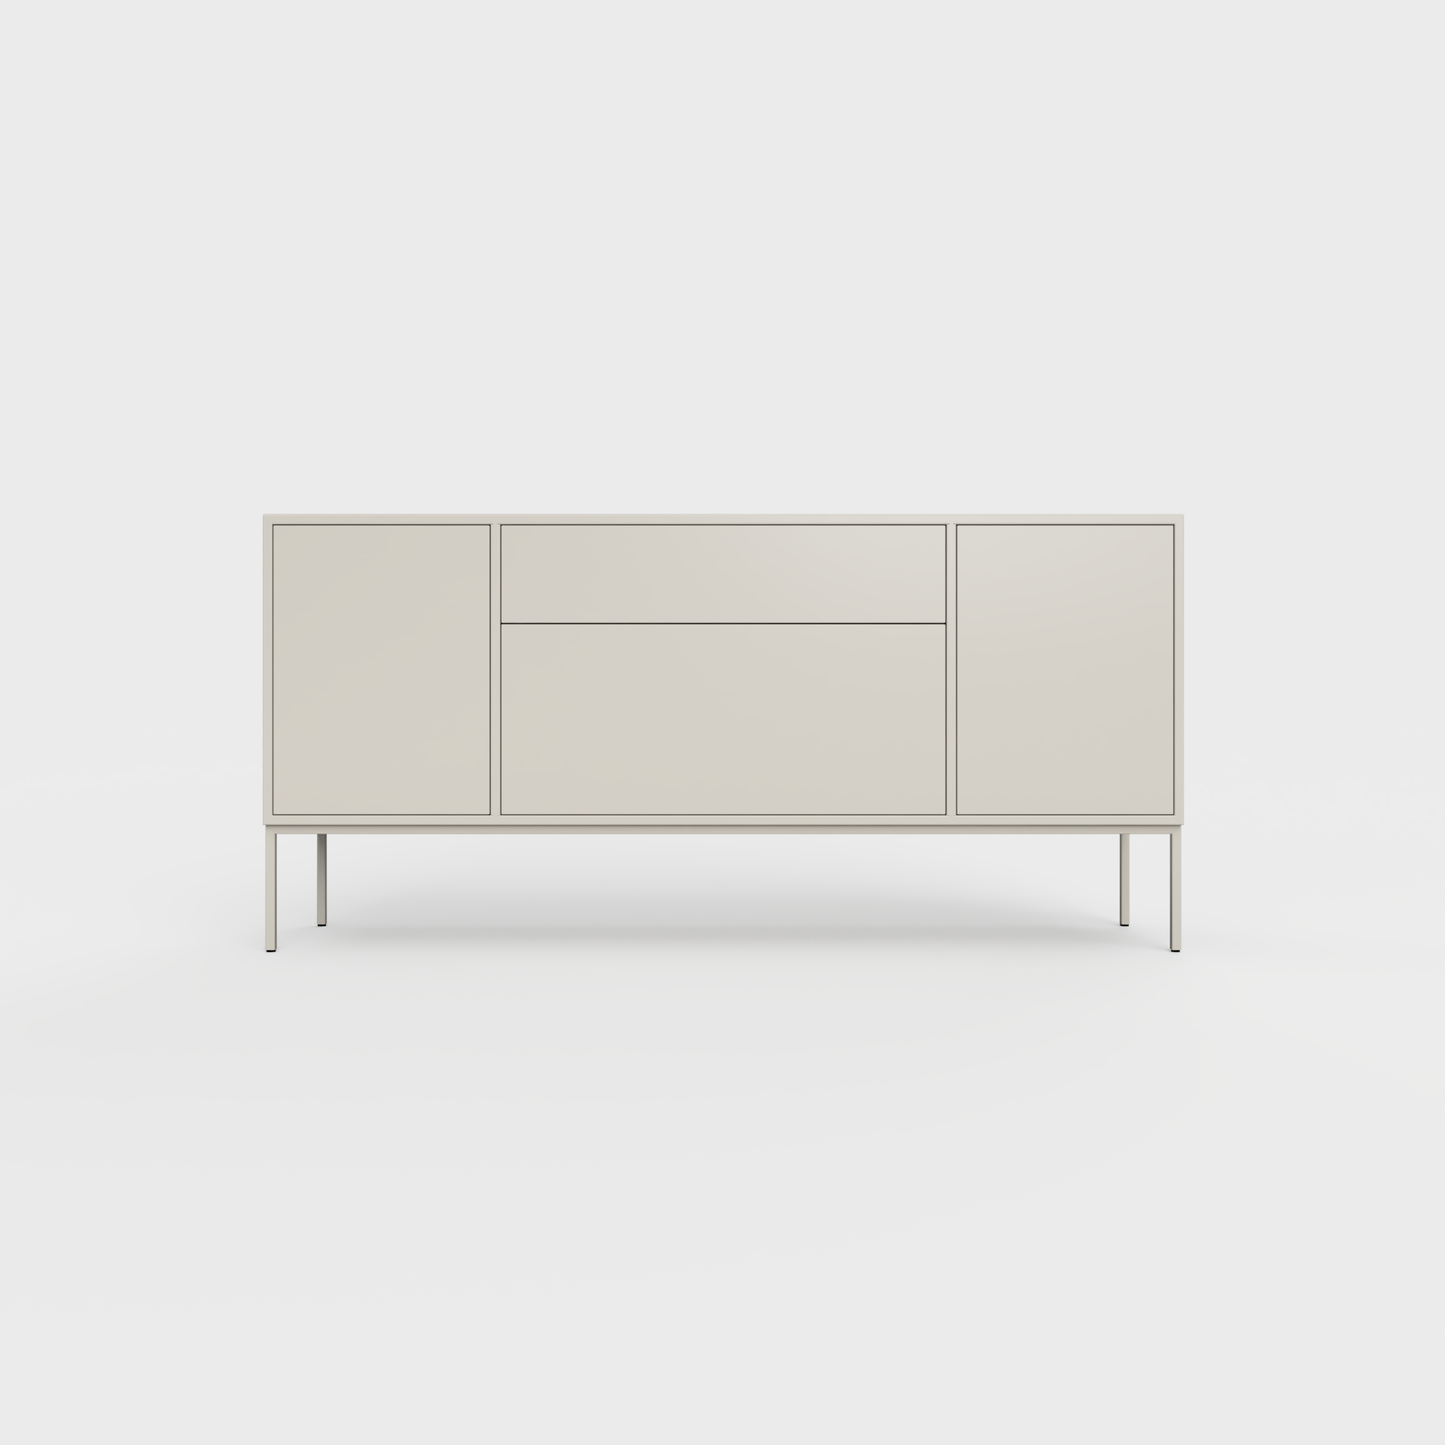 Arnika 02 Sideboard in Light Beige color, powder-coated steel, elegant and modern piece of furniture for your living room